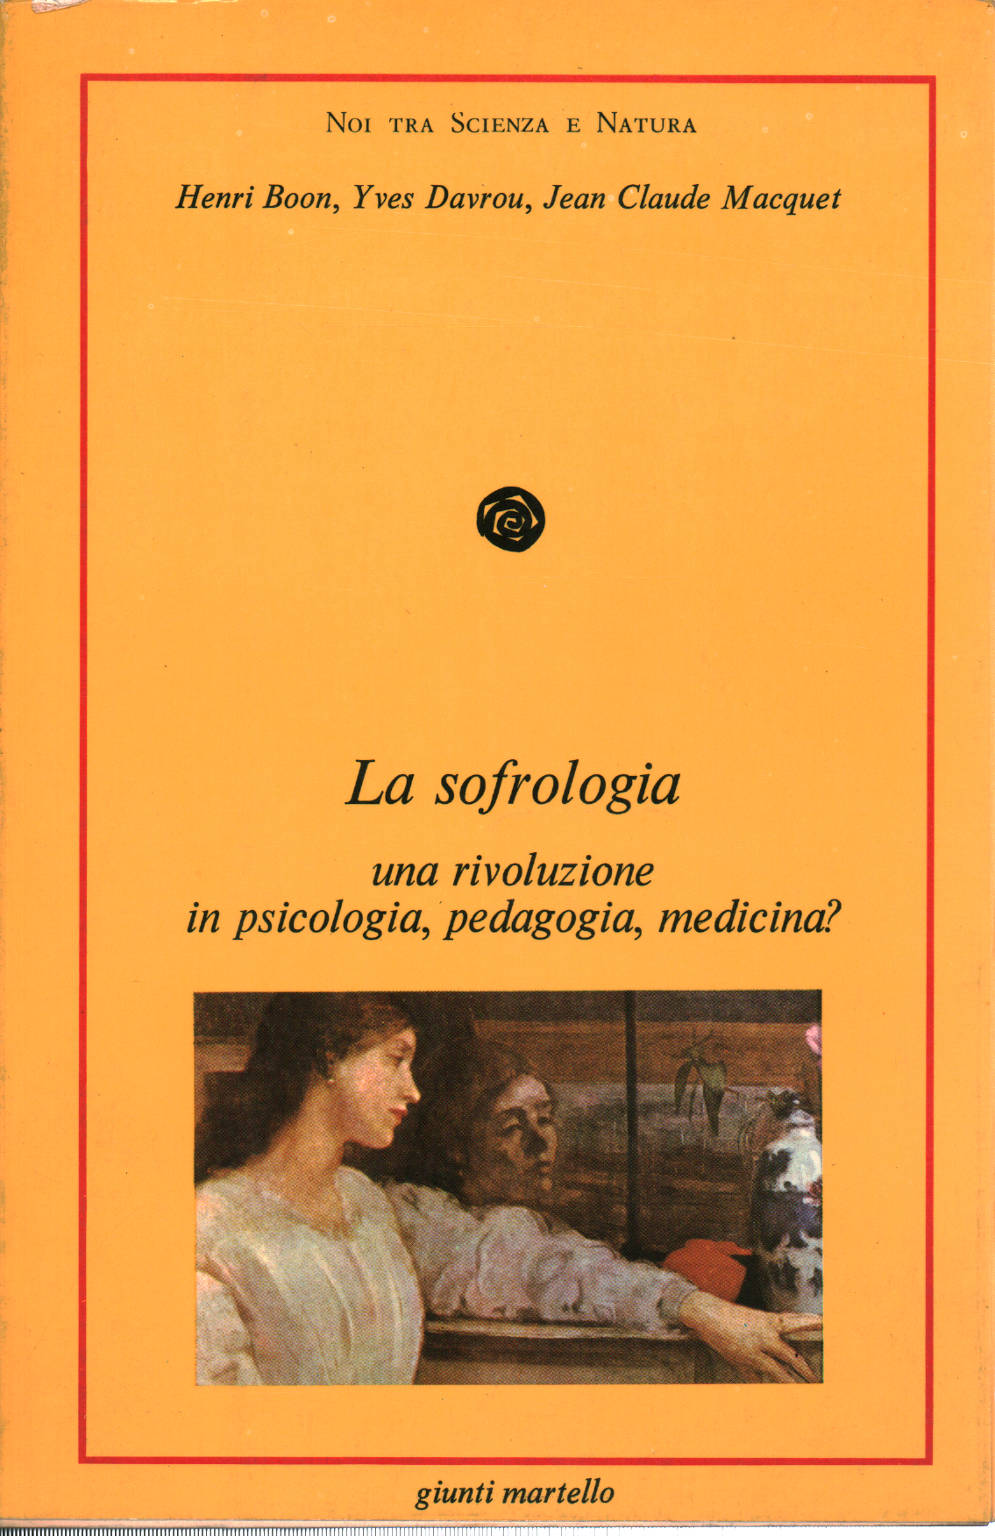 The sophrology, H. Boon, Y. Davrou J-C. Macquet